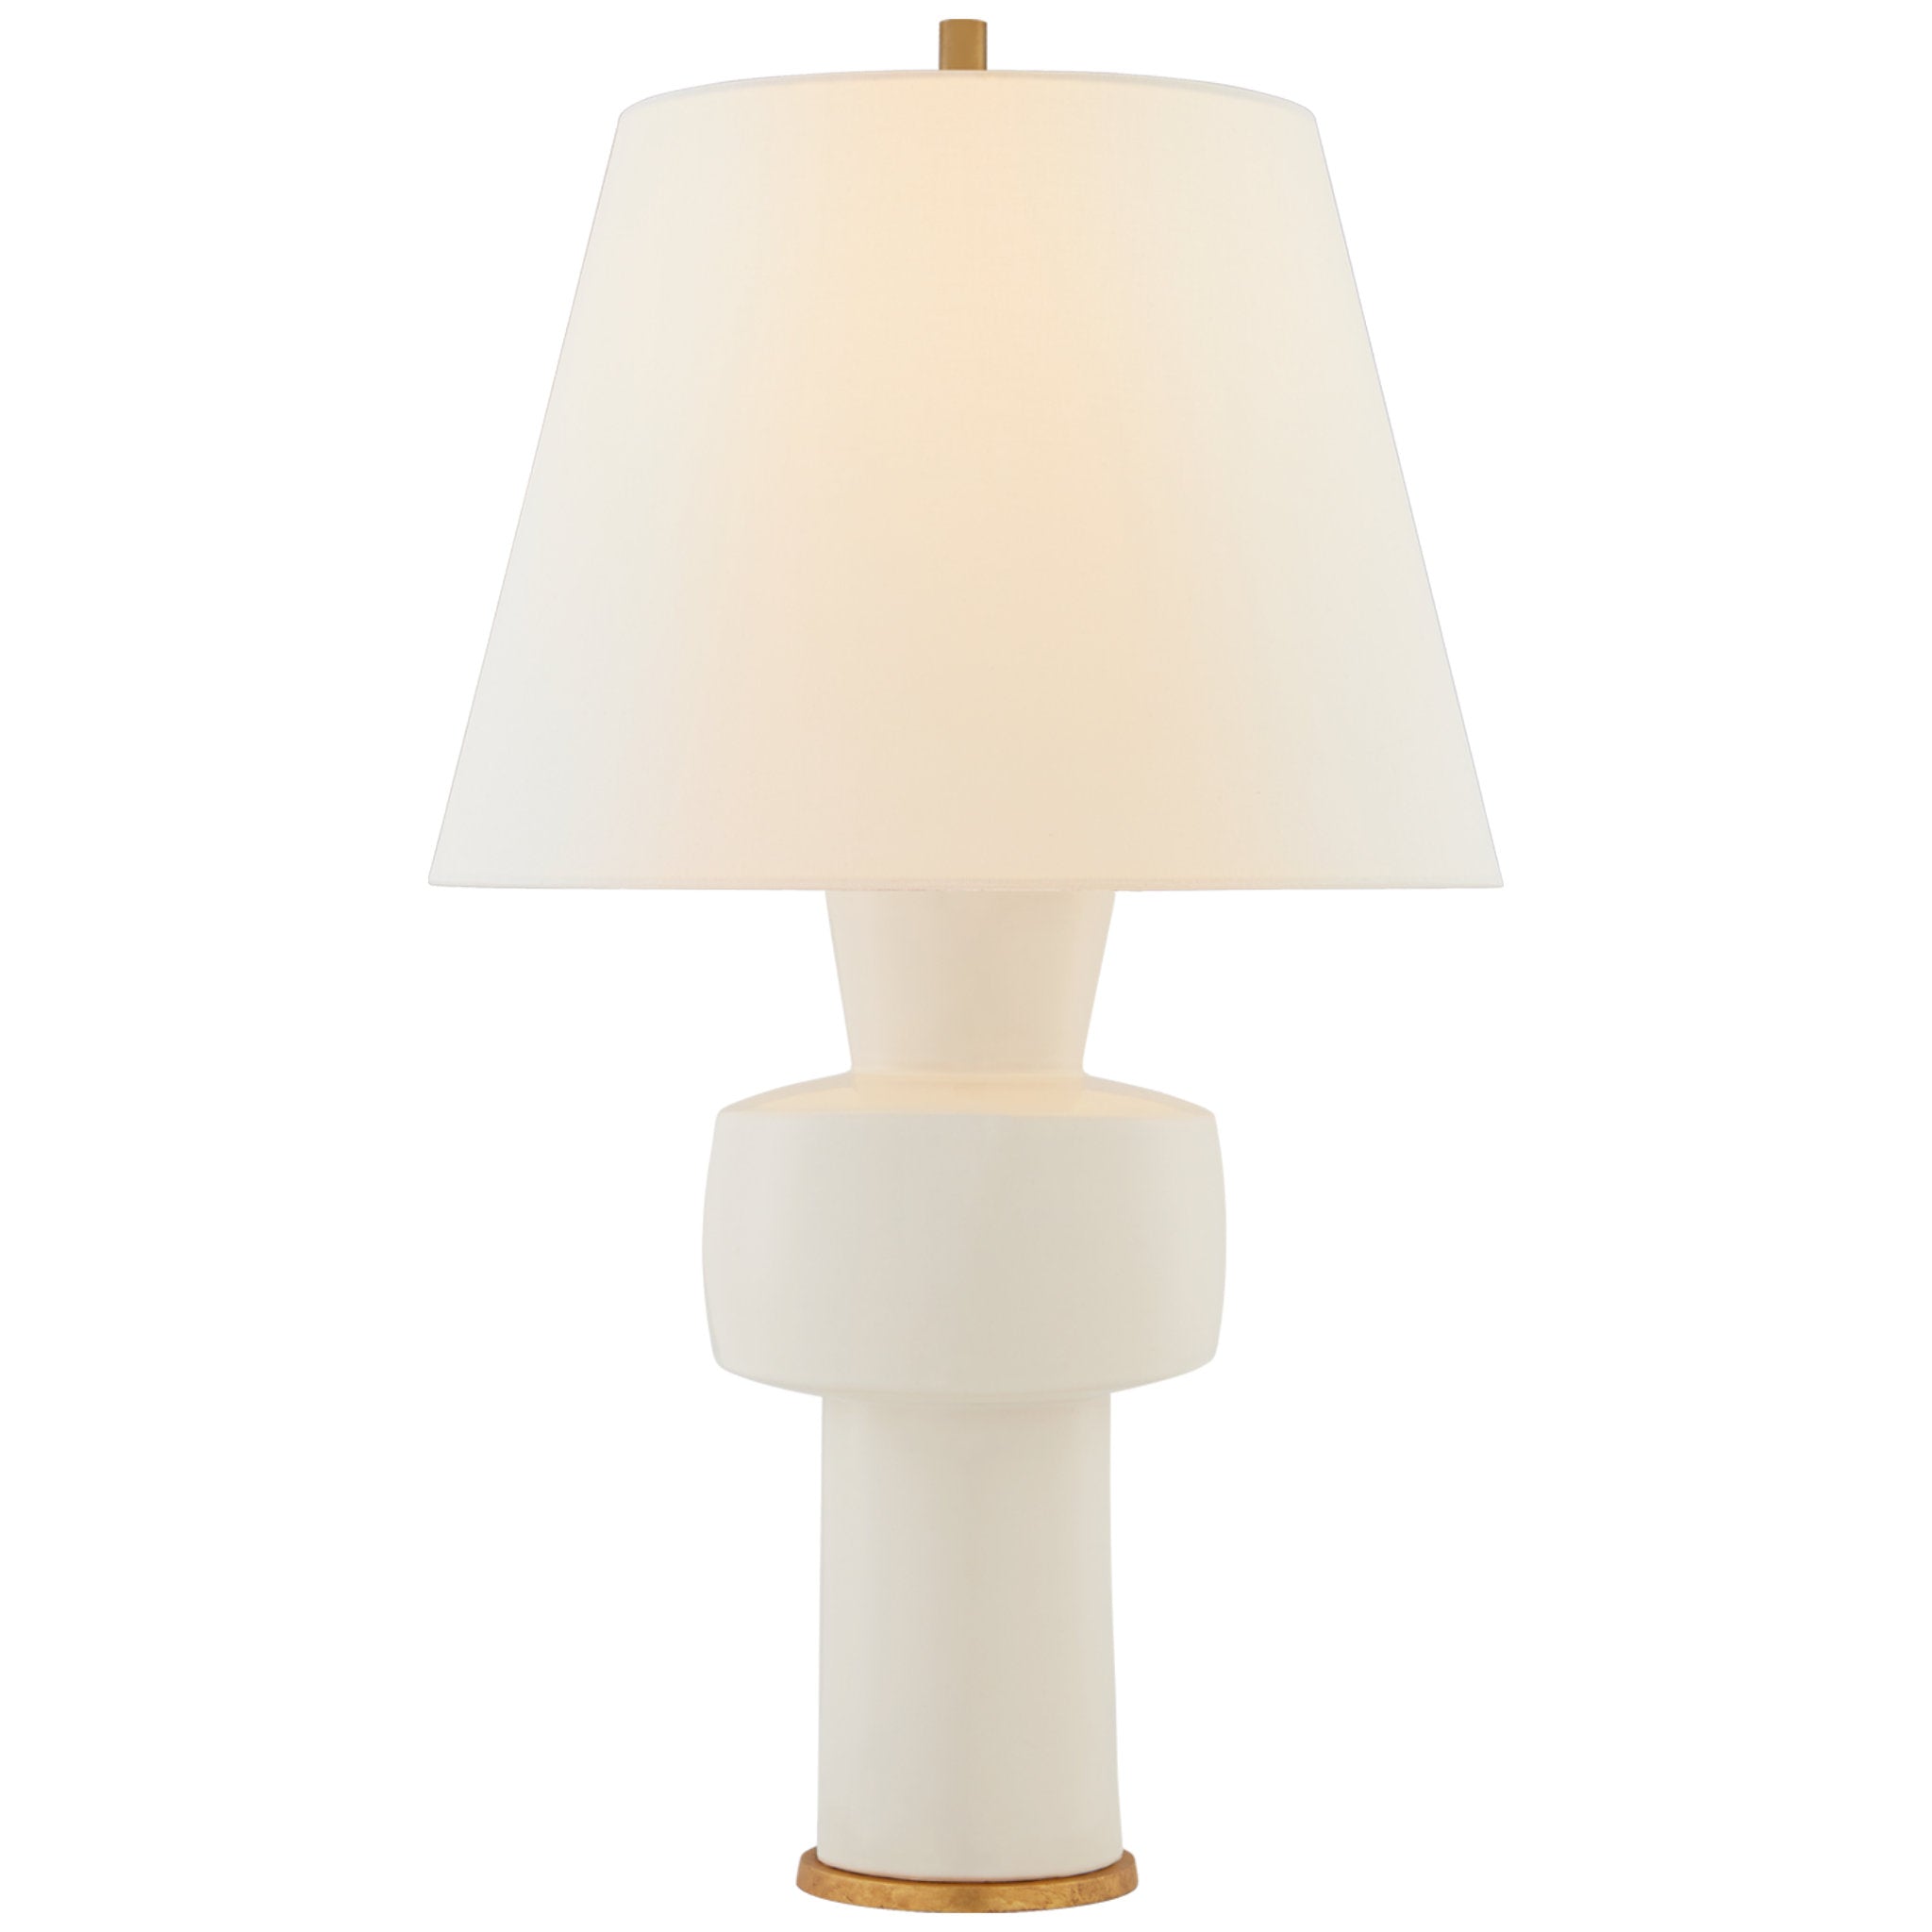 Christopher Spitzmiller Eerdmans Medium Table Lamp in Ivory with Linen Shade